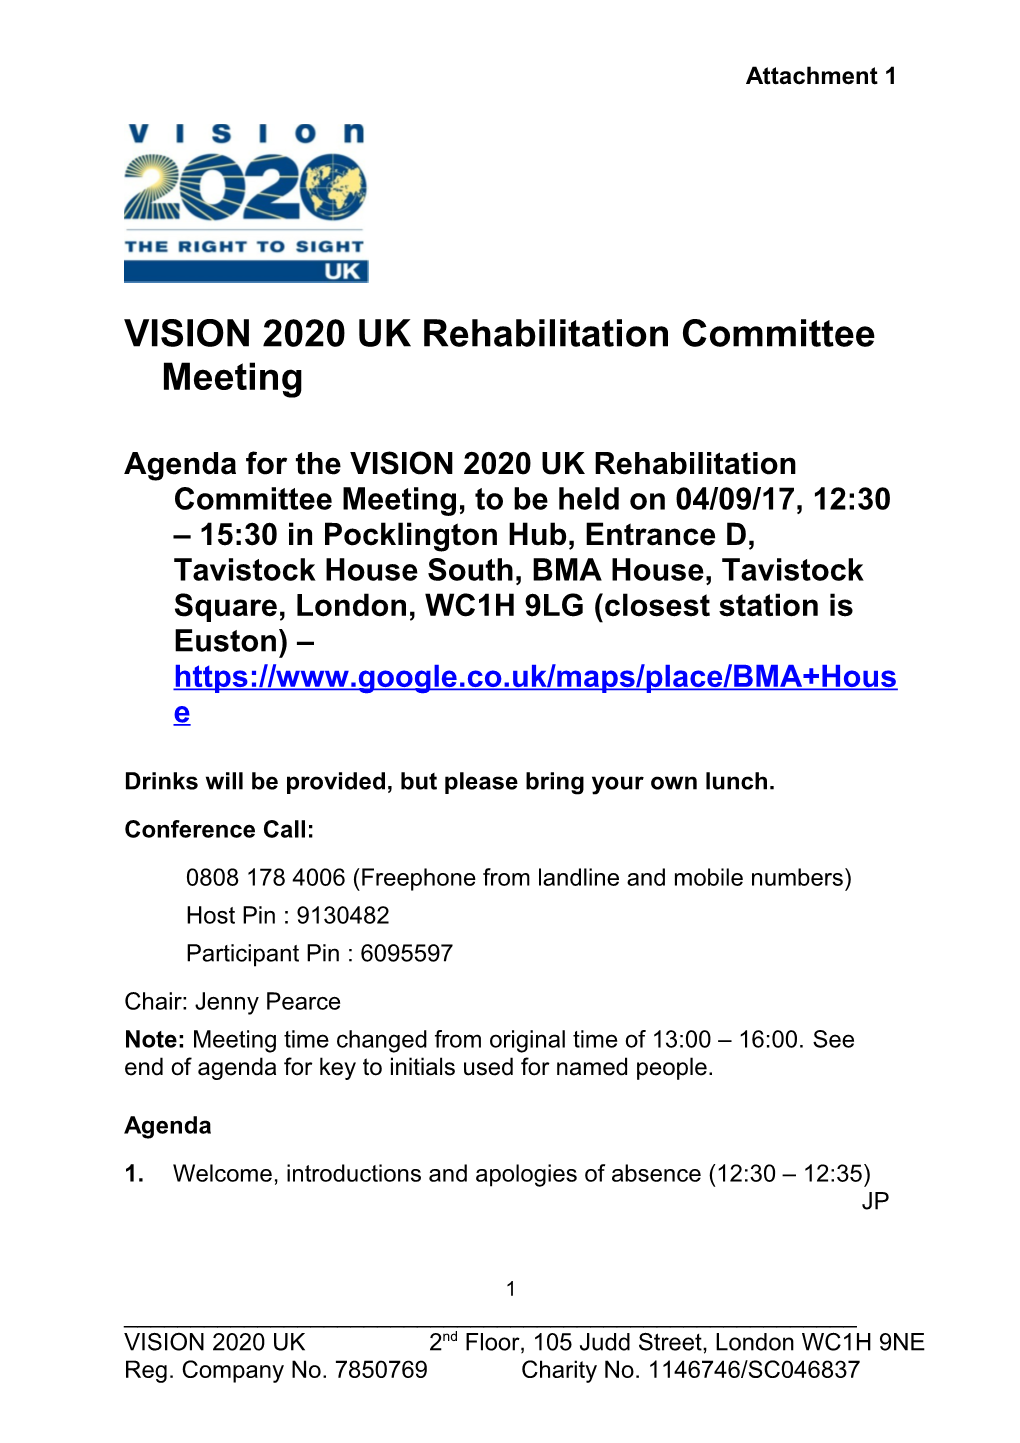 VISION 2020 UK Rehabilitation Committee Meeting